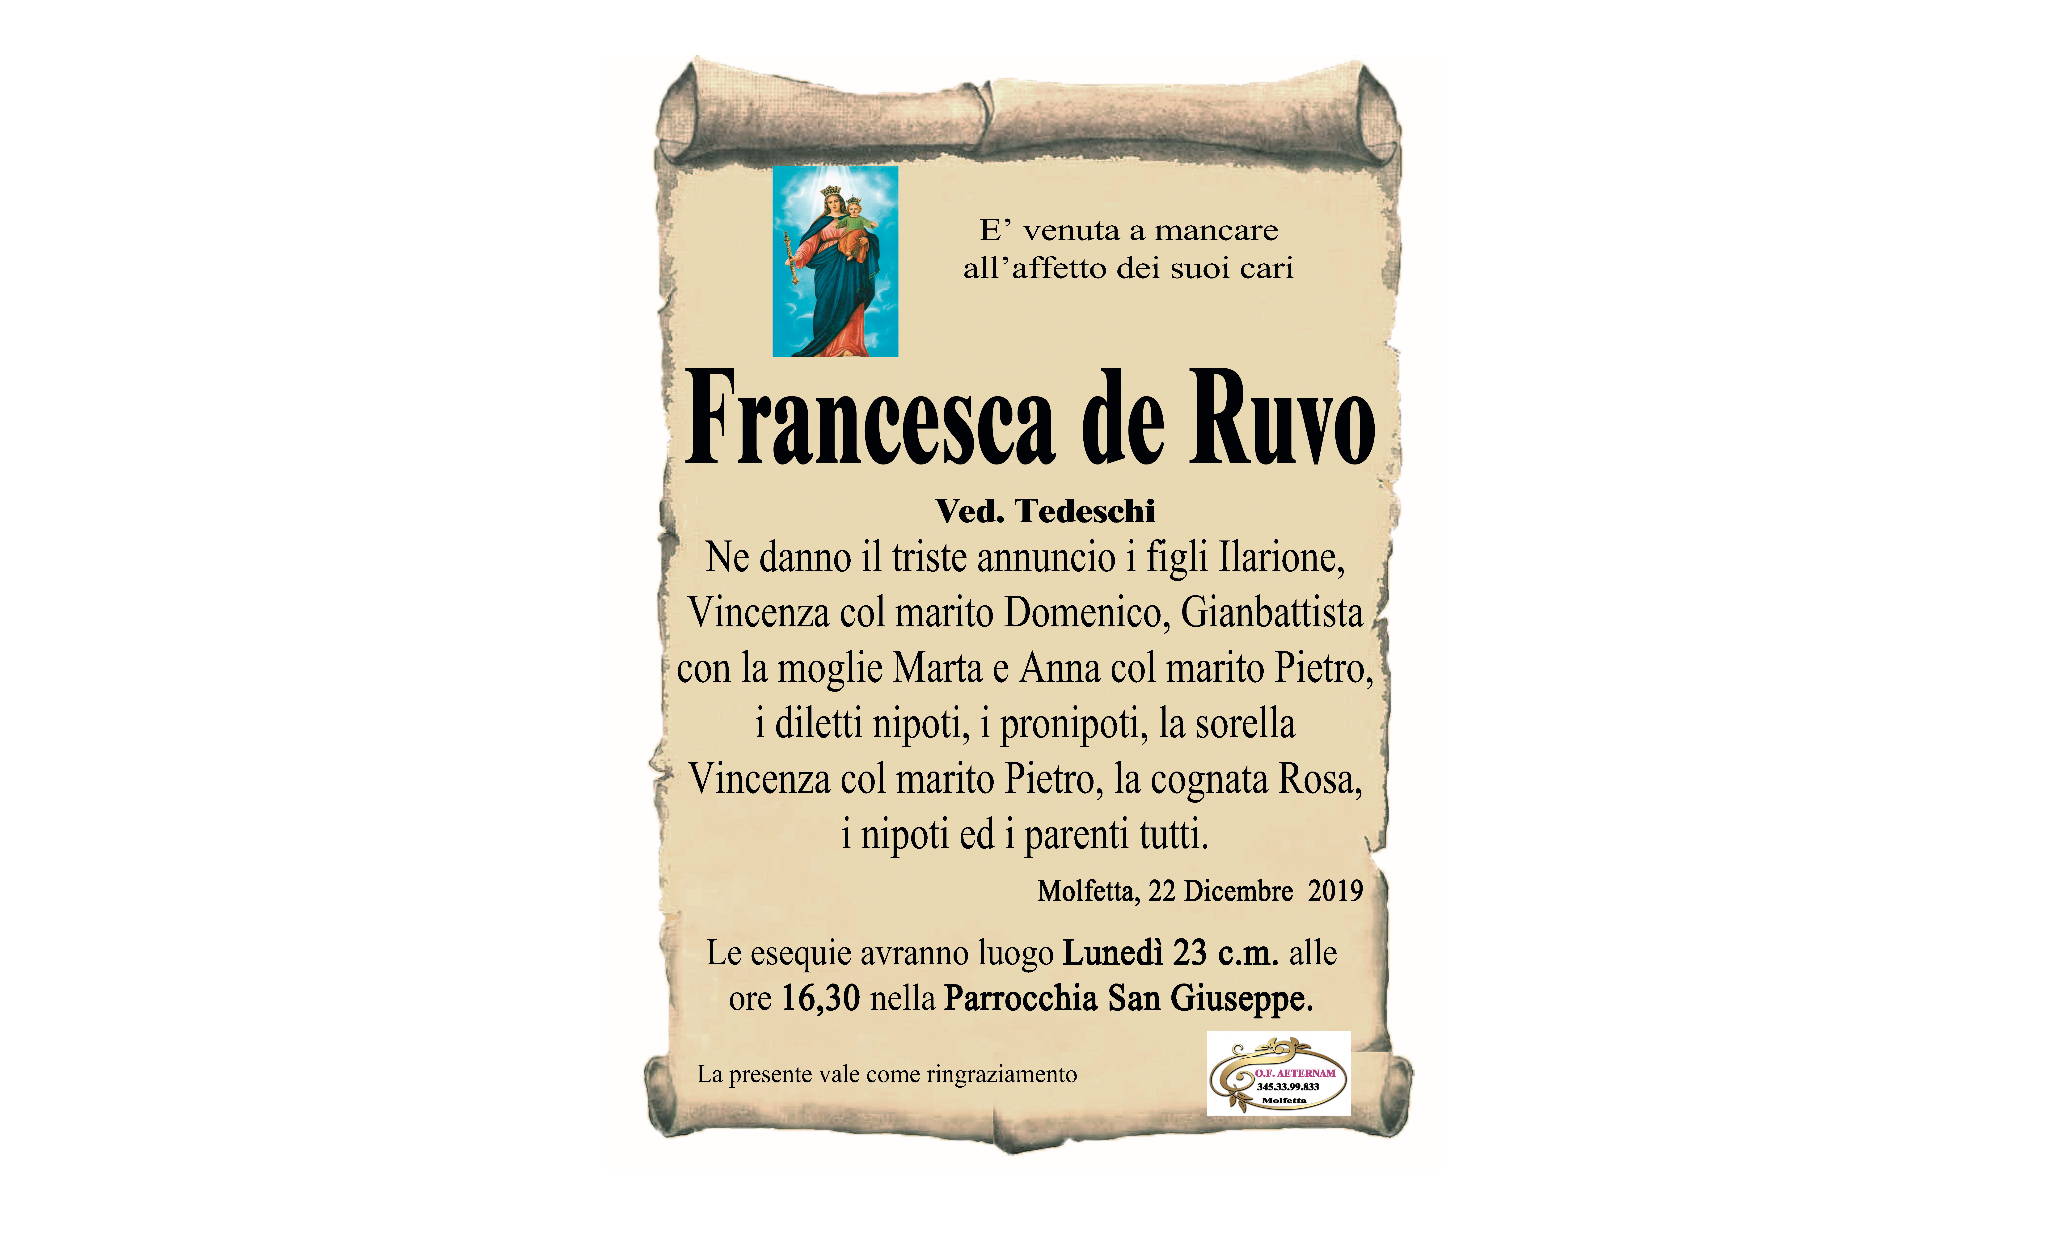 Francesca de Ruvo